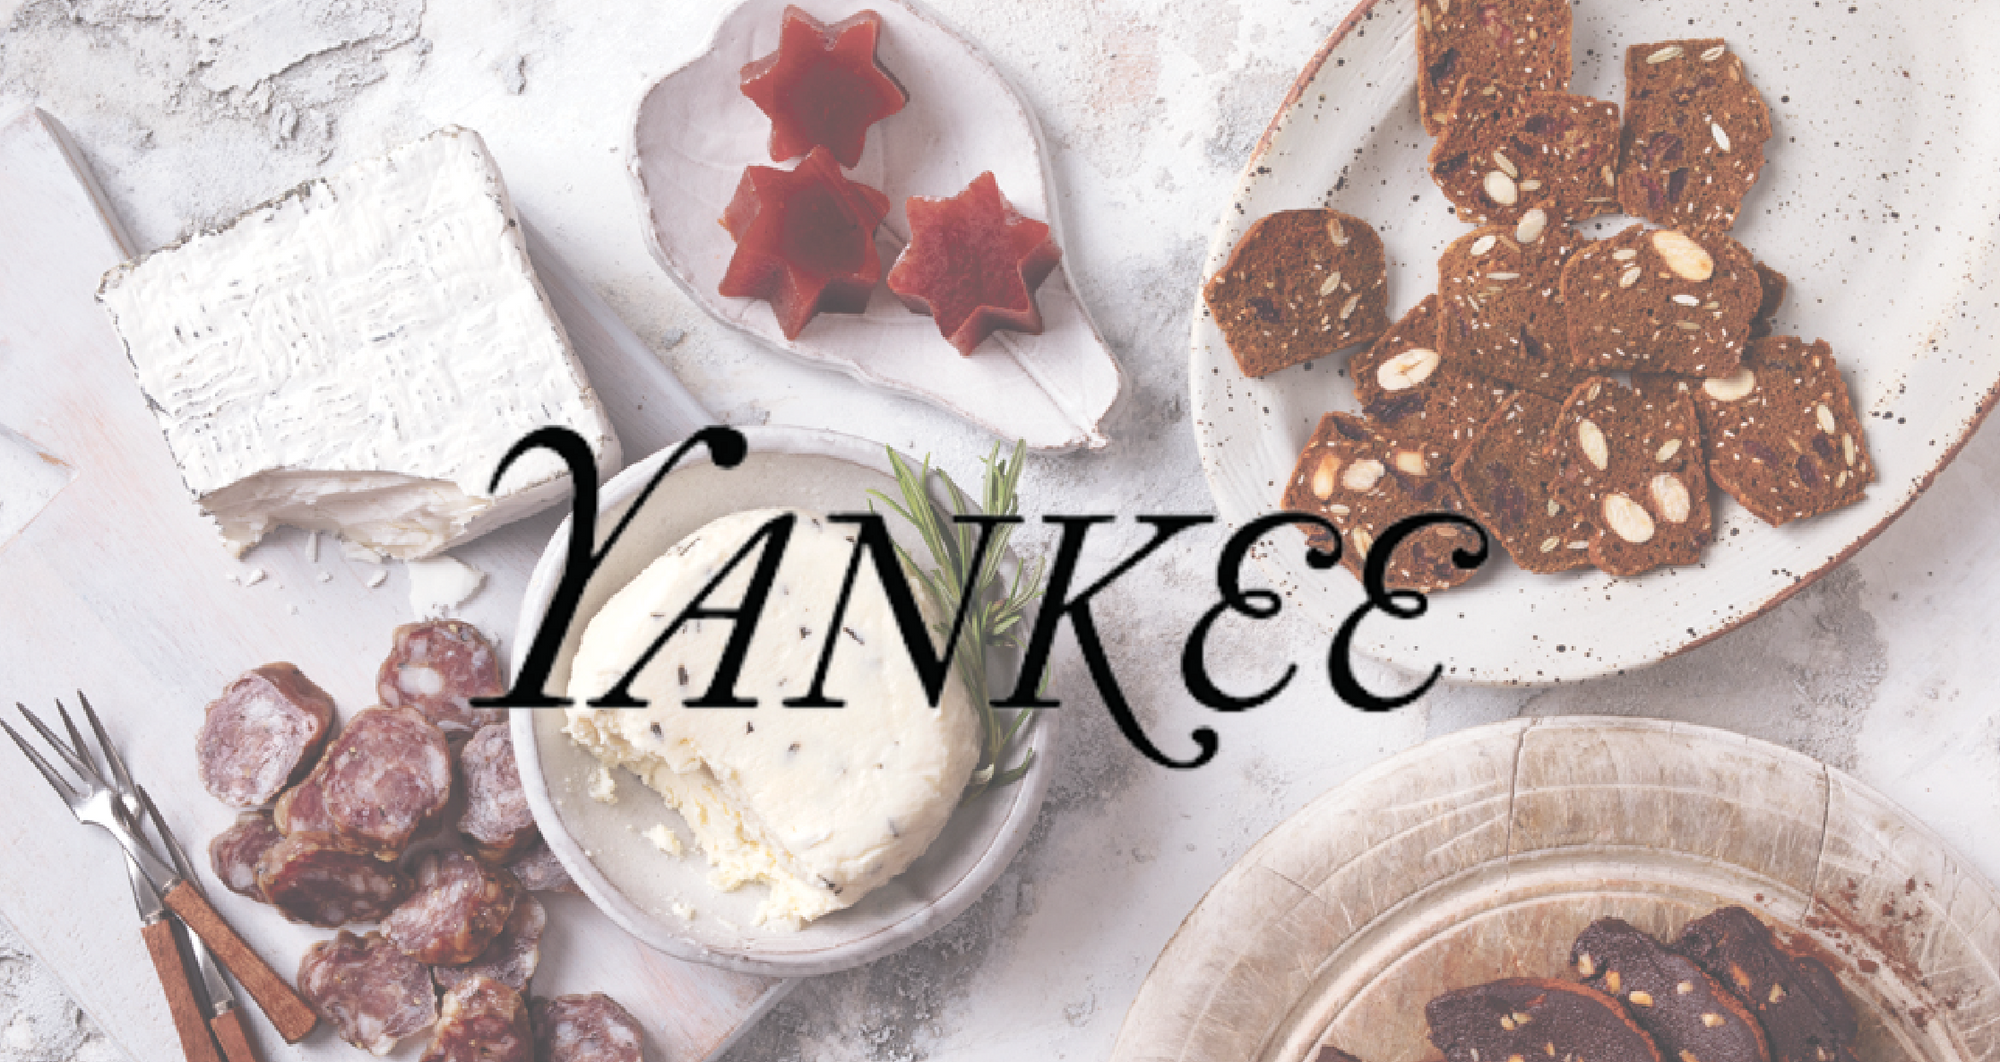 Cranberry Almond Crisps Top Yankee Magazines 2021 Food Awards List